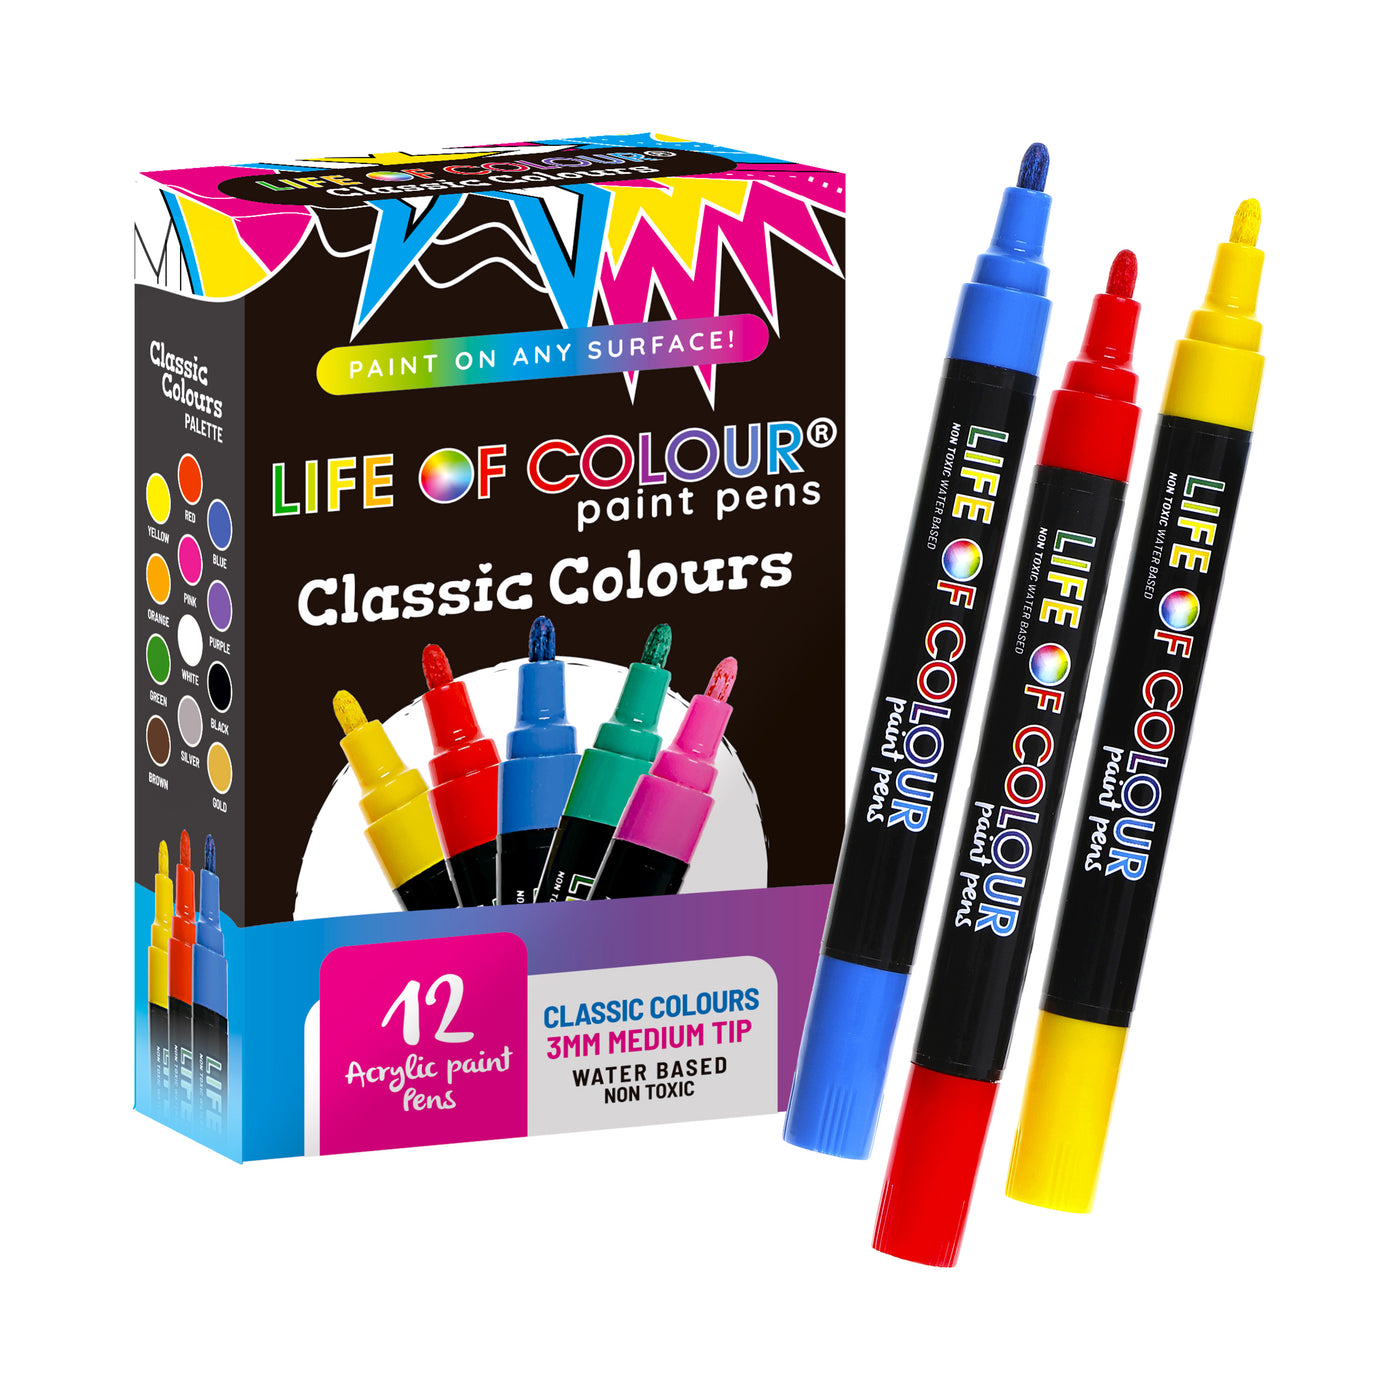 Classic Colours 3mm Medium Tip Acrylic Paint Pens - Set of 12